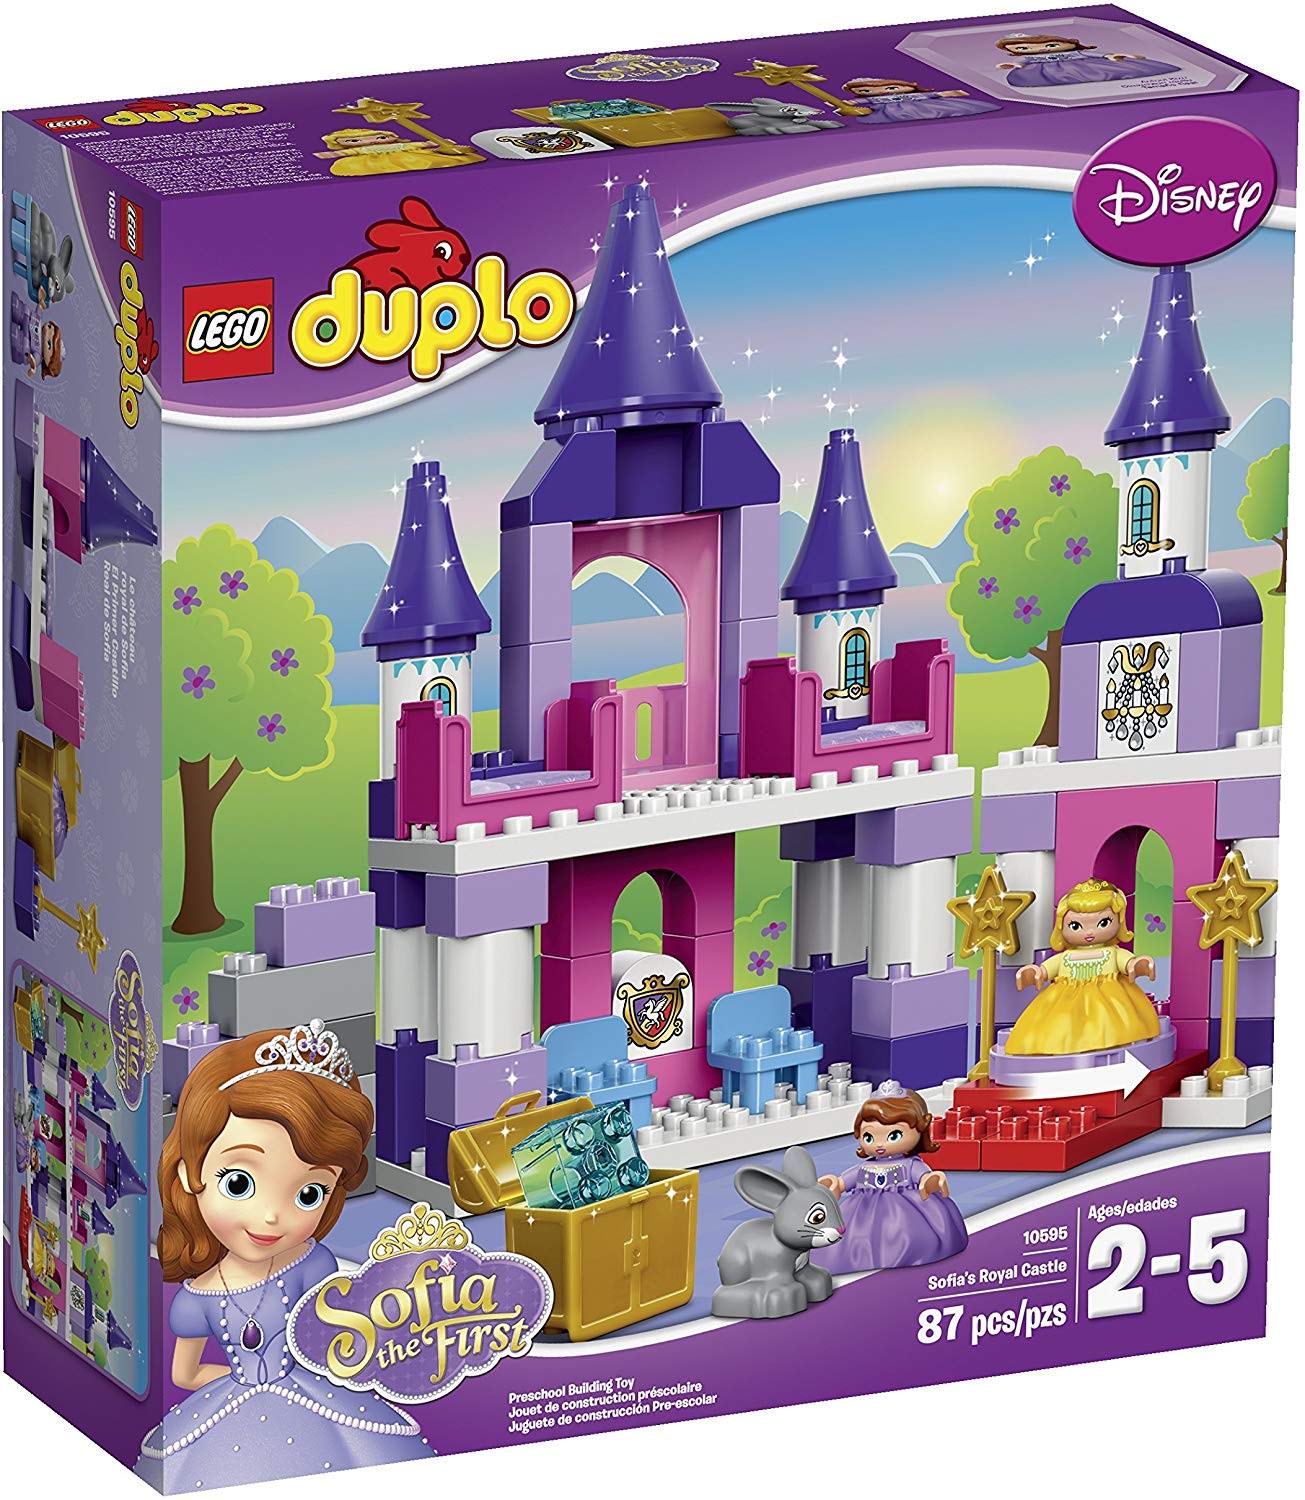 LEGO DUPLO Disney Sofia the First Royal Castle 10595